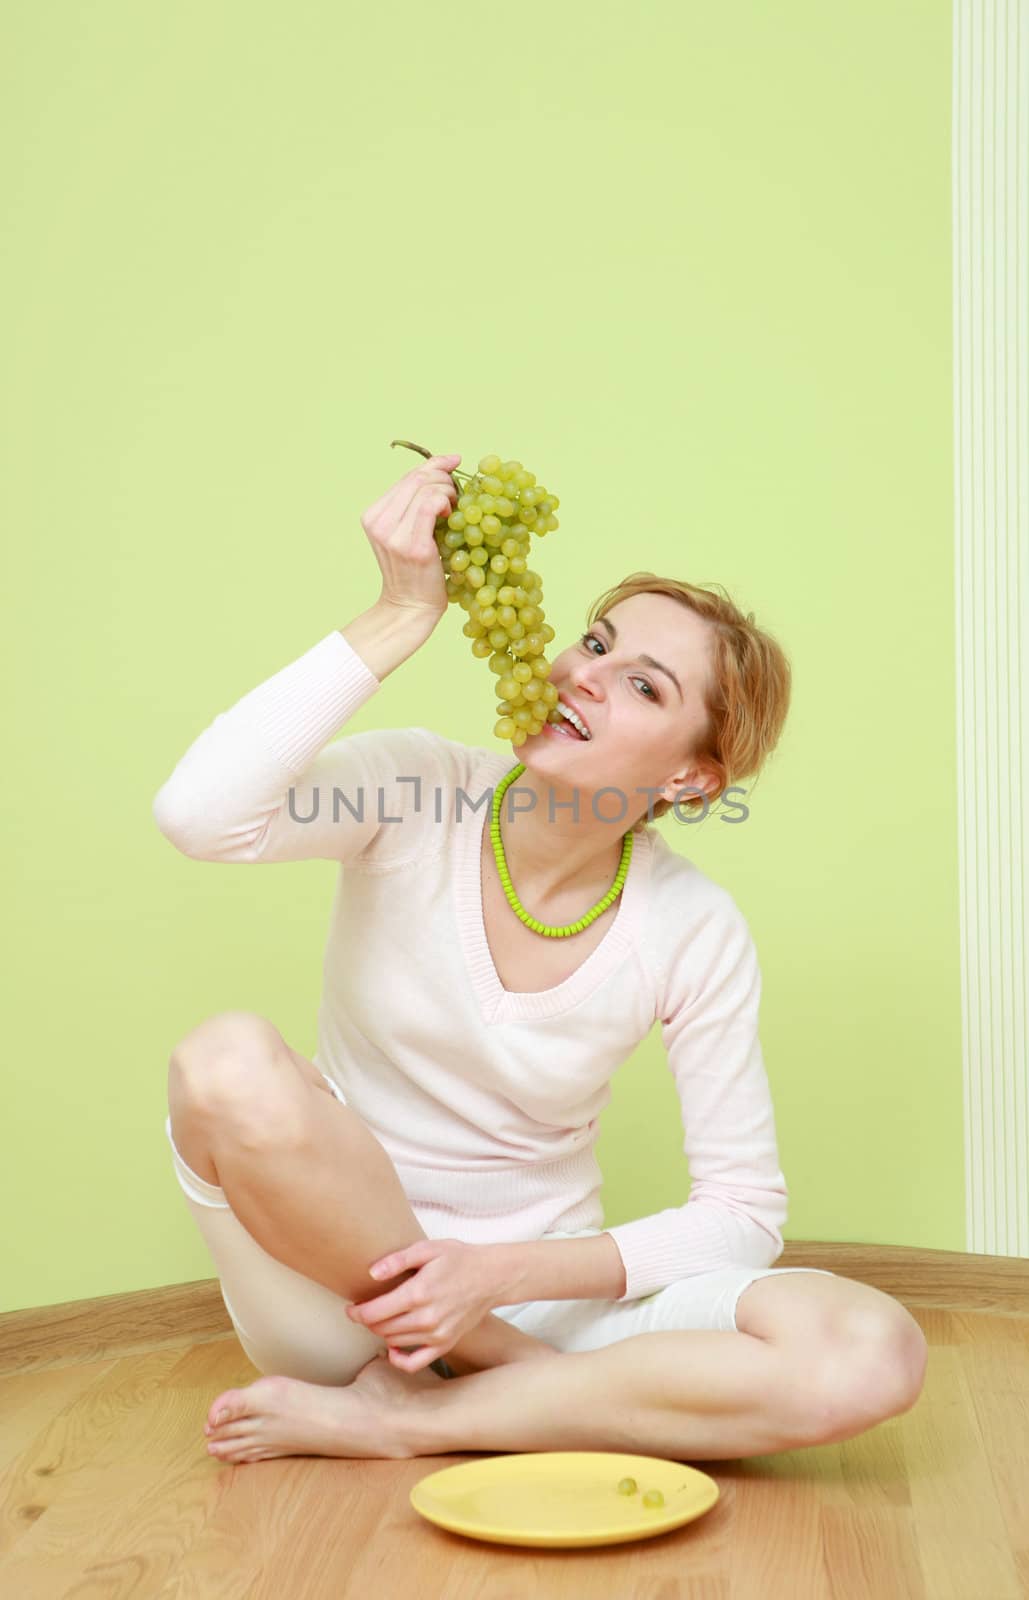 Tasty grapes by velkol